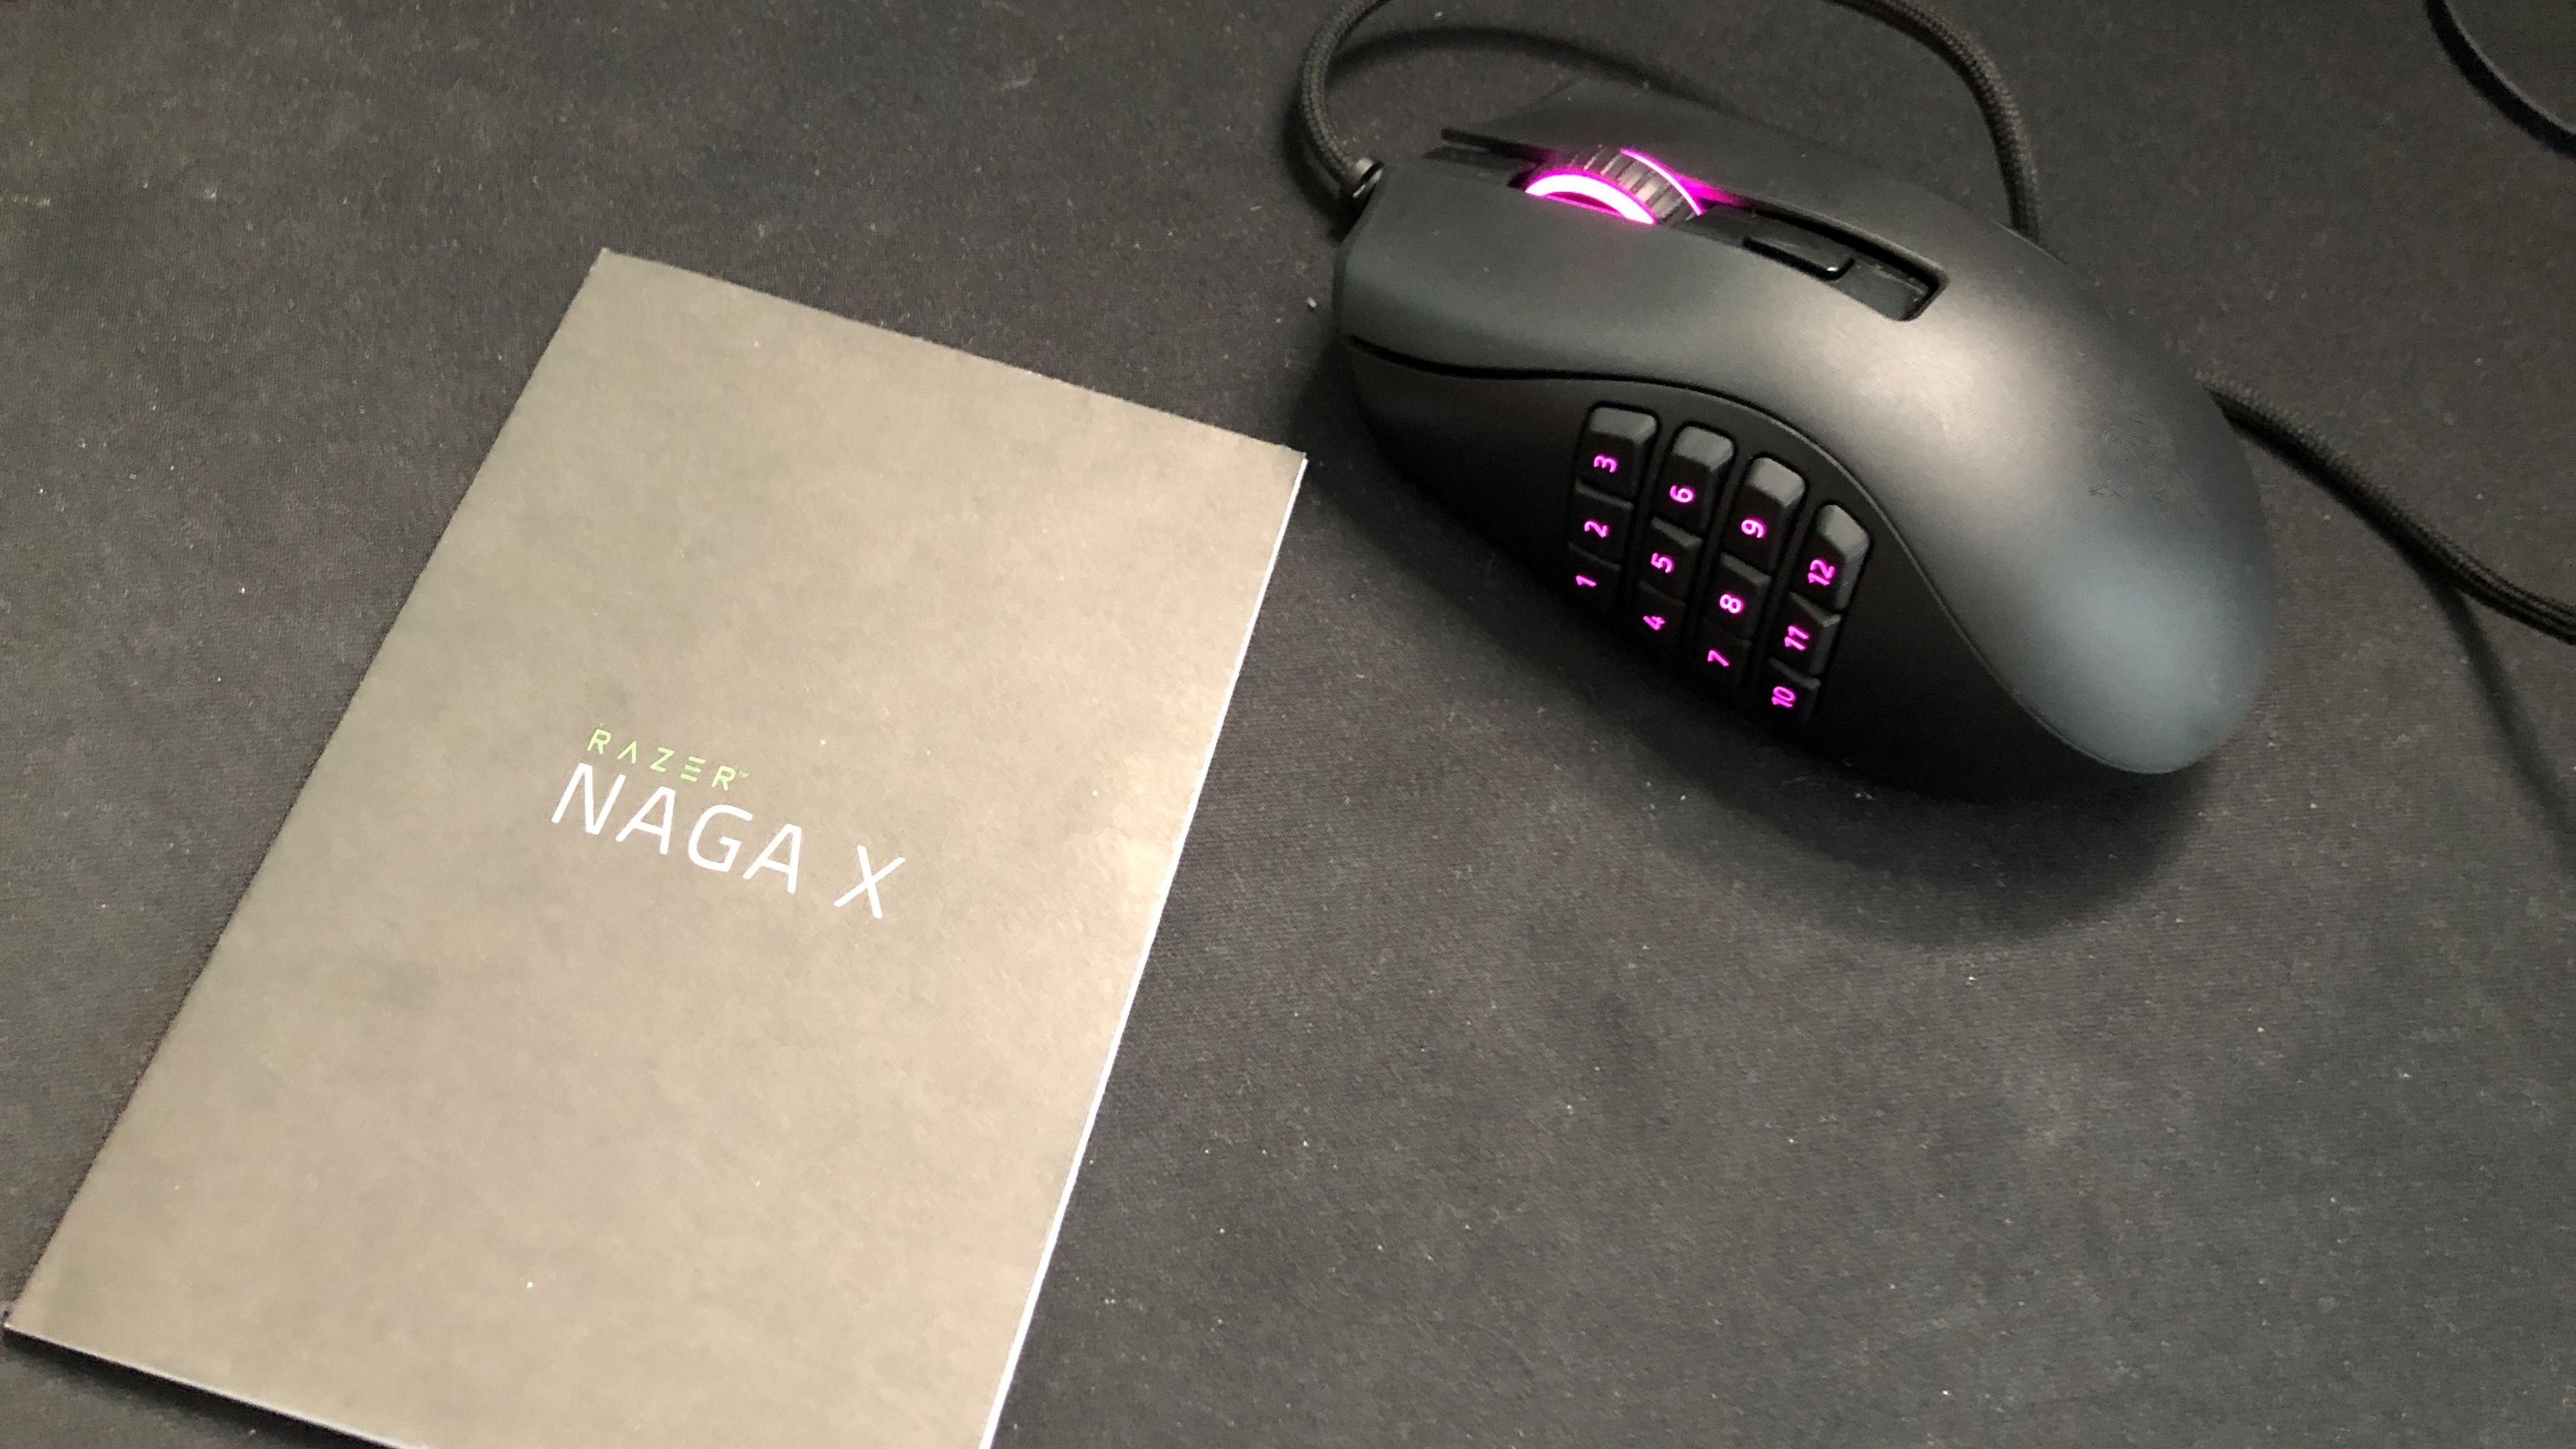  Razer Naga X gaming mouse review 